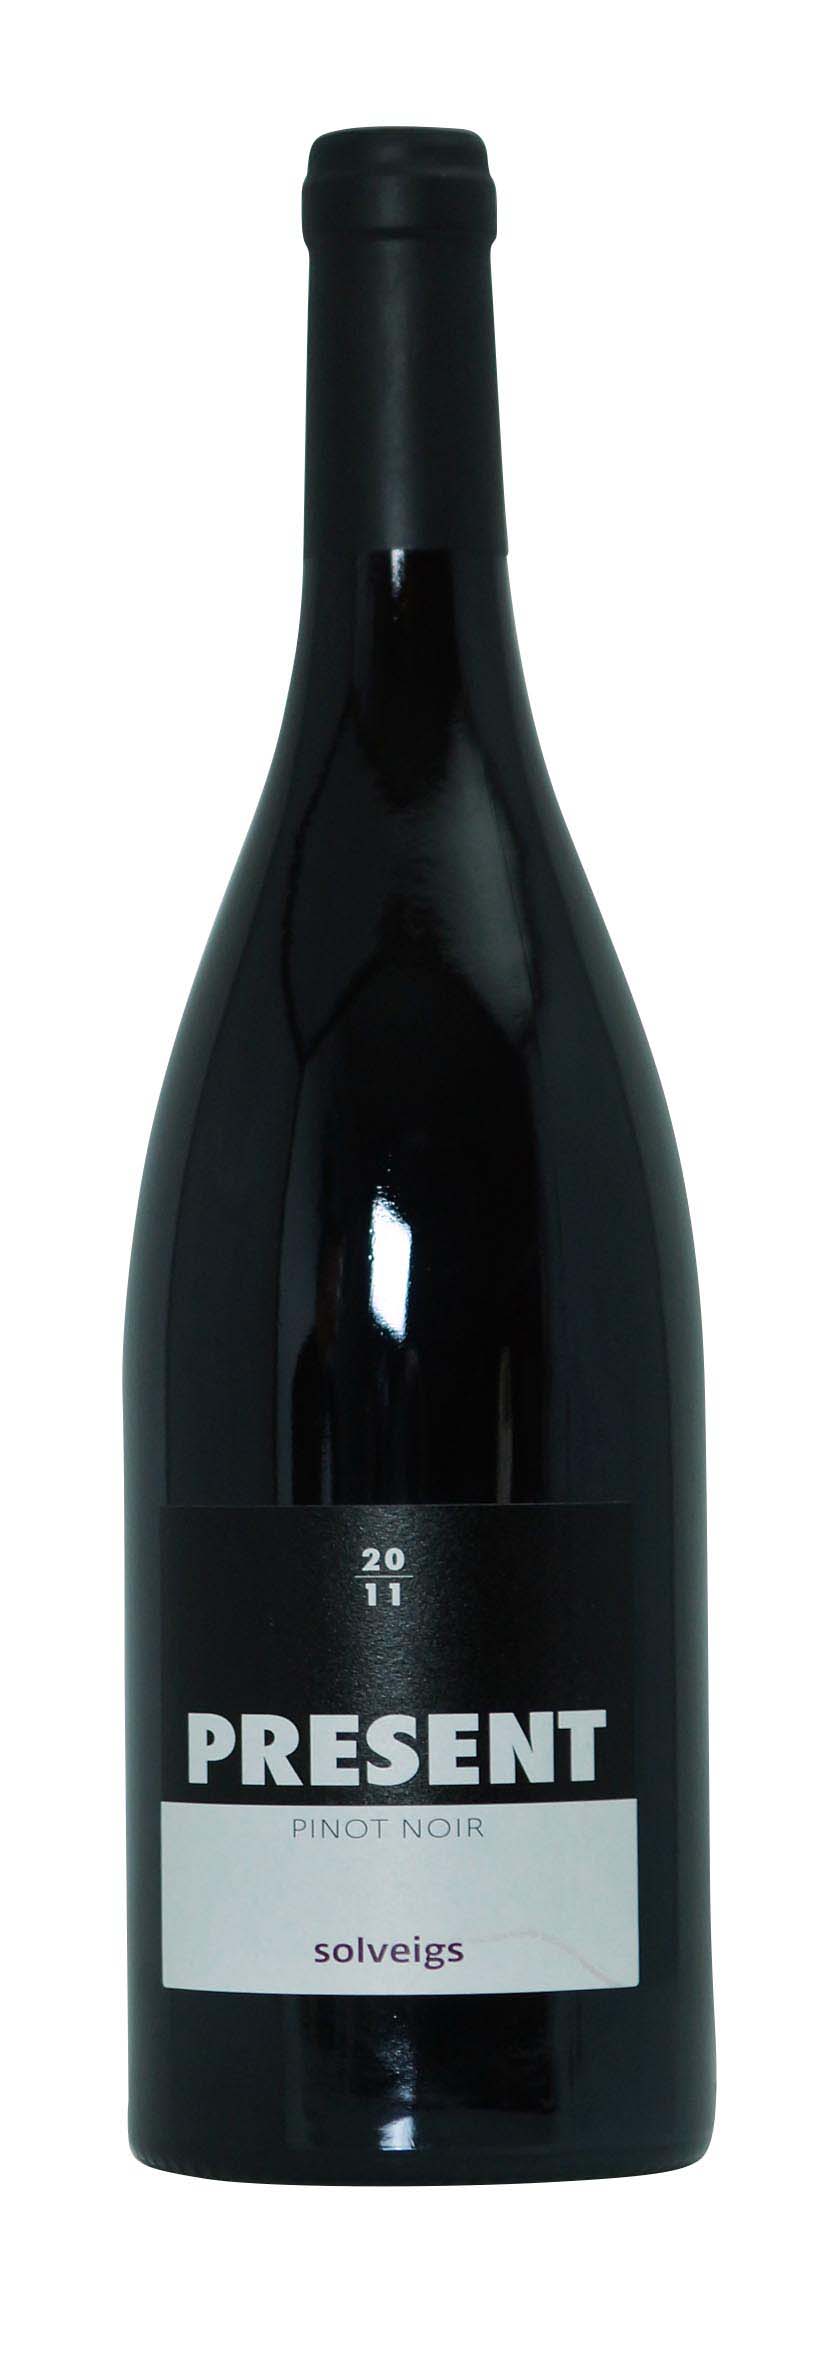 Rheingau Present Pinot Noir 2011